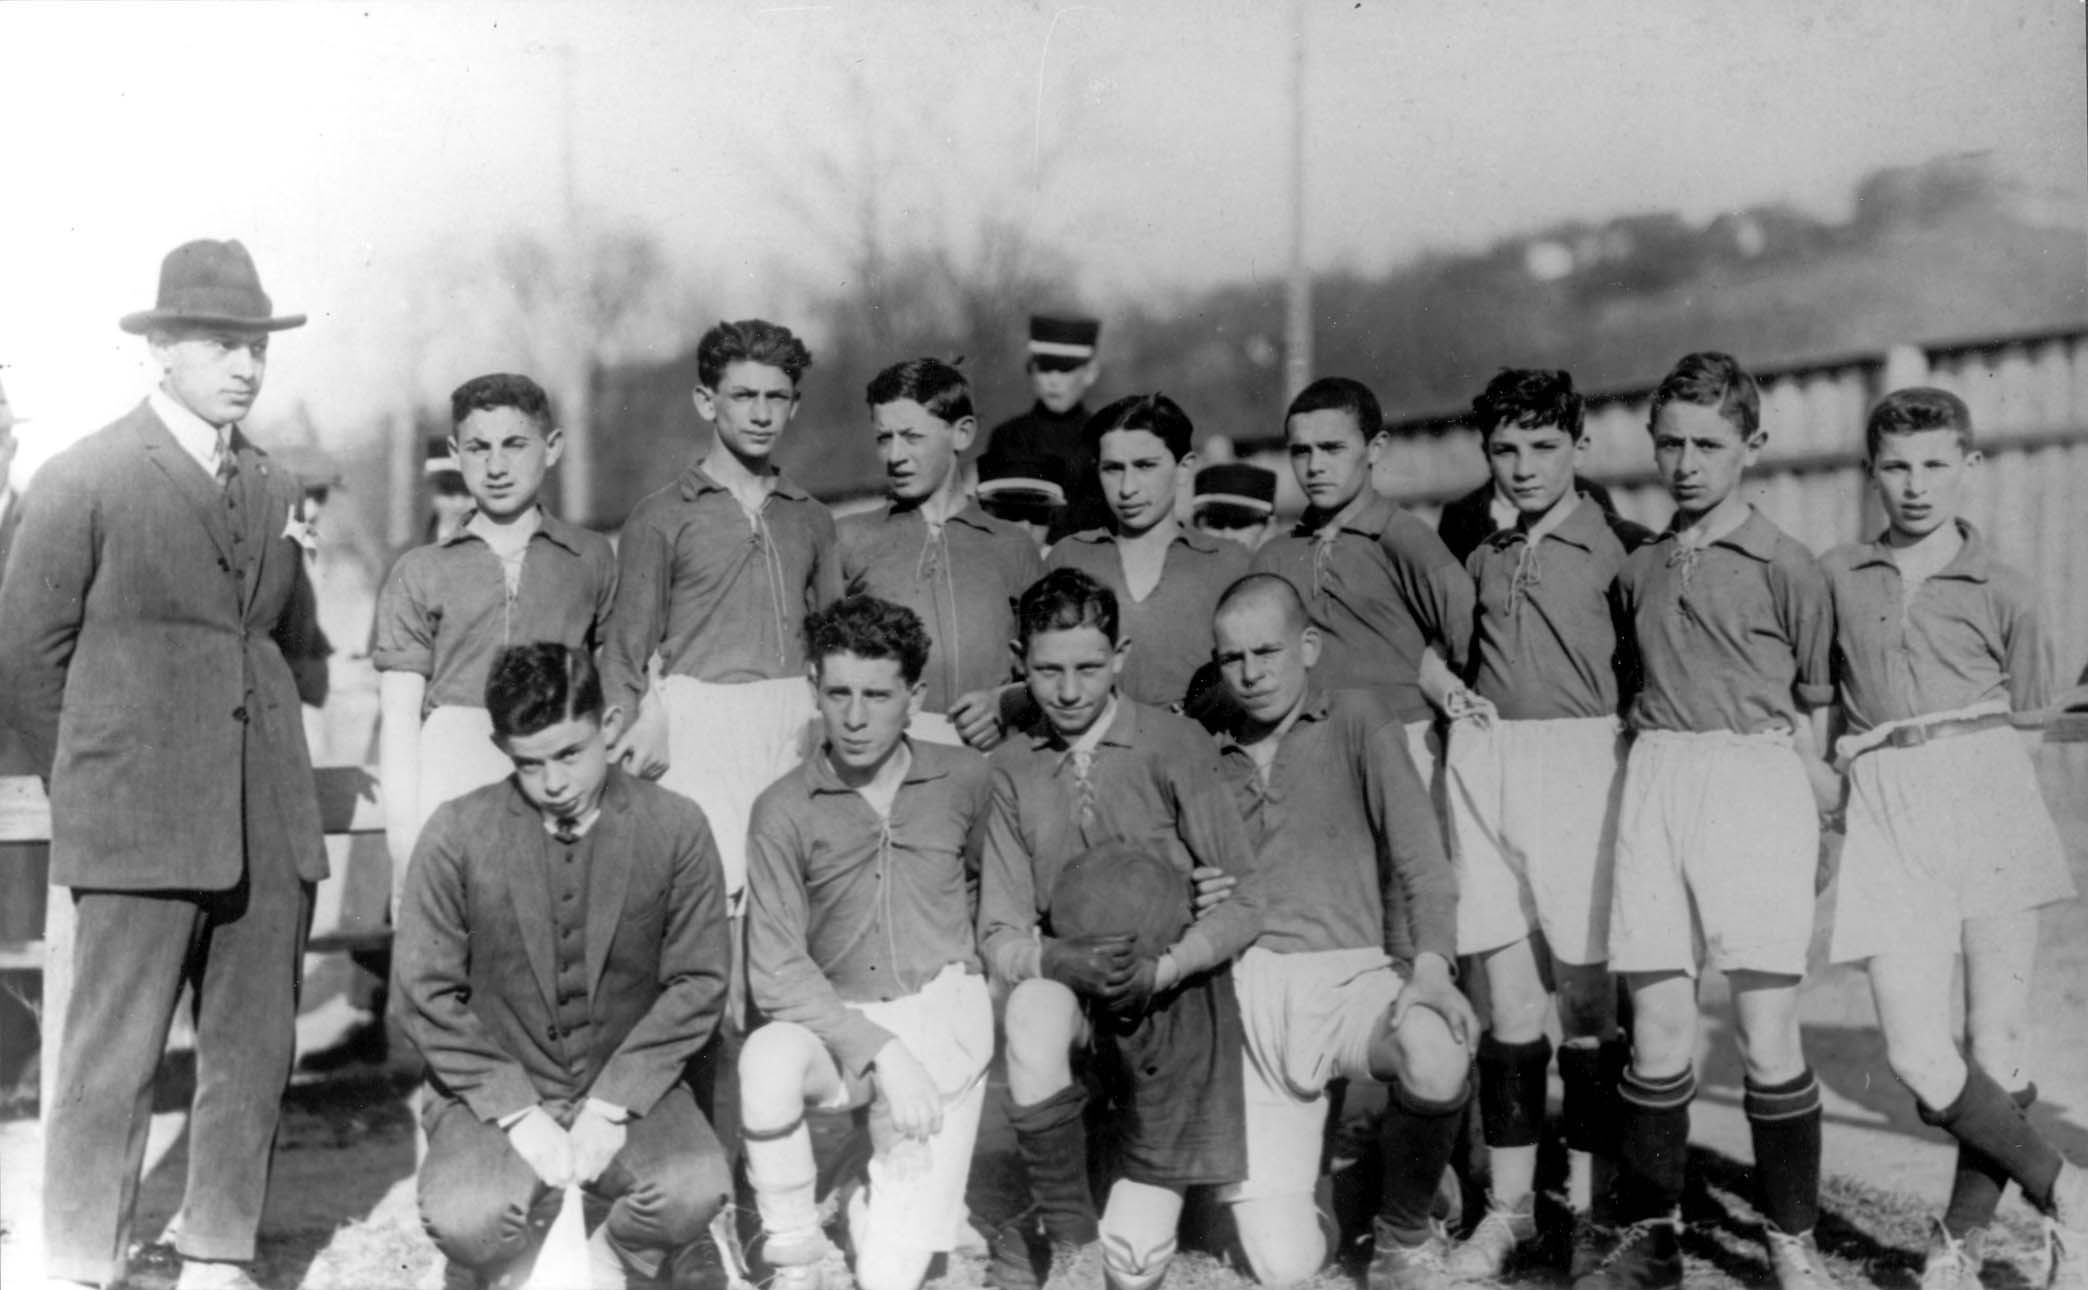 Kaunas, Lituania, preguerra. Equipo de fútbol juvenil judío